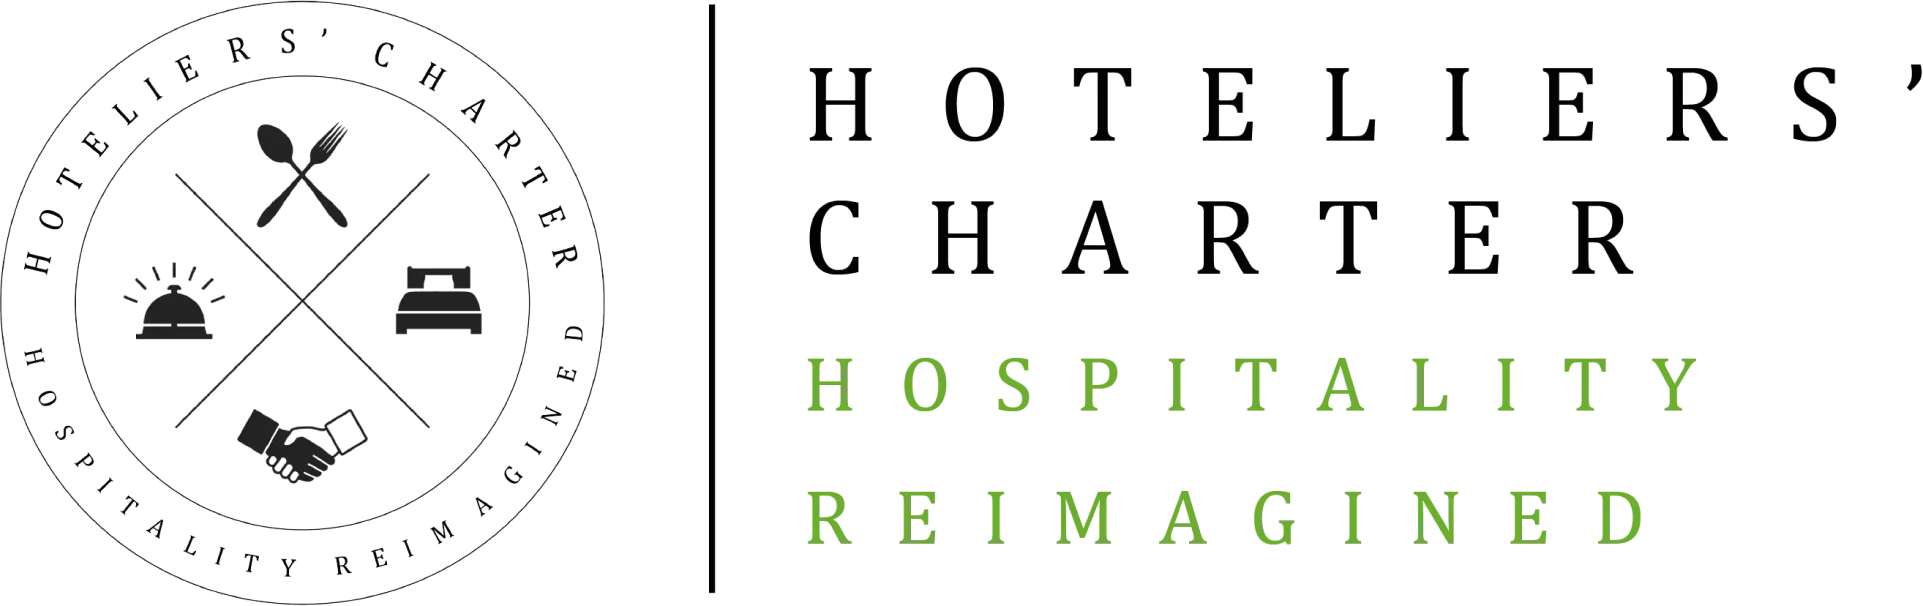 hoteliers charter logo